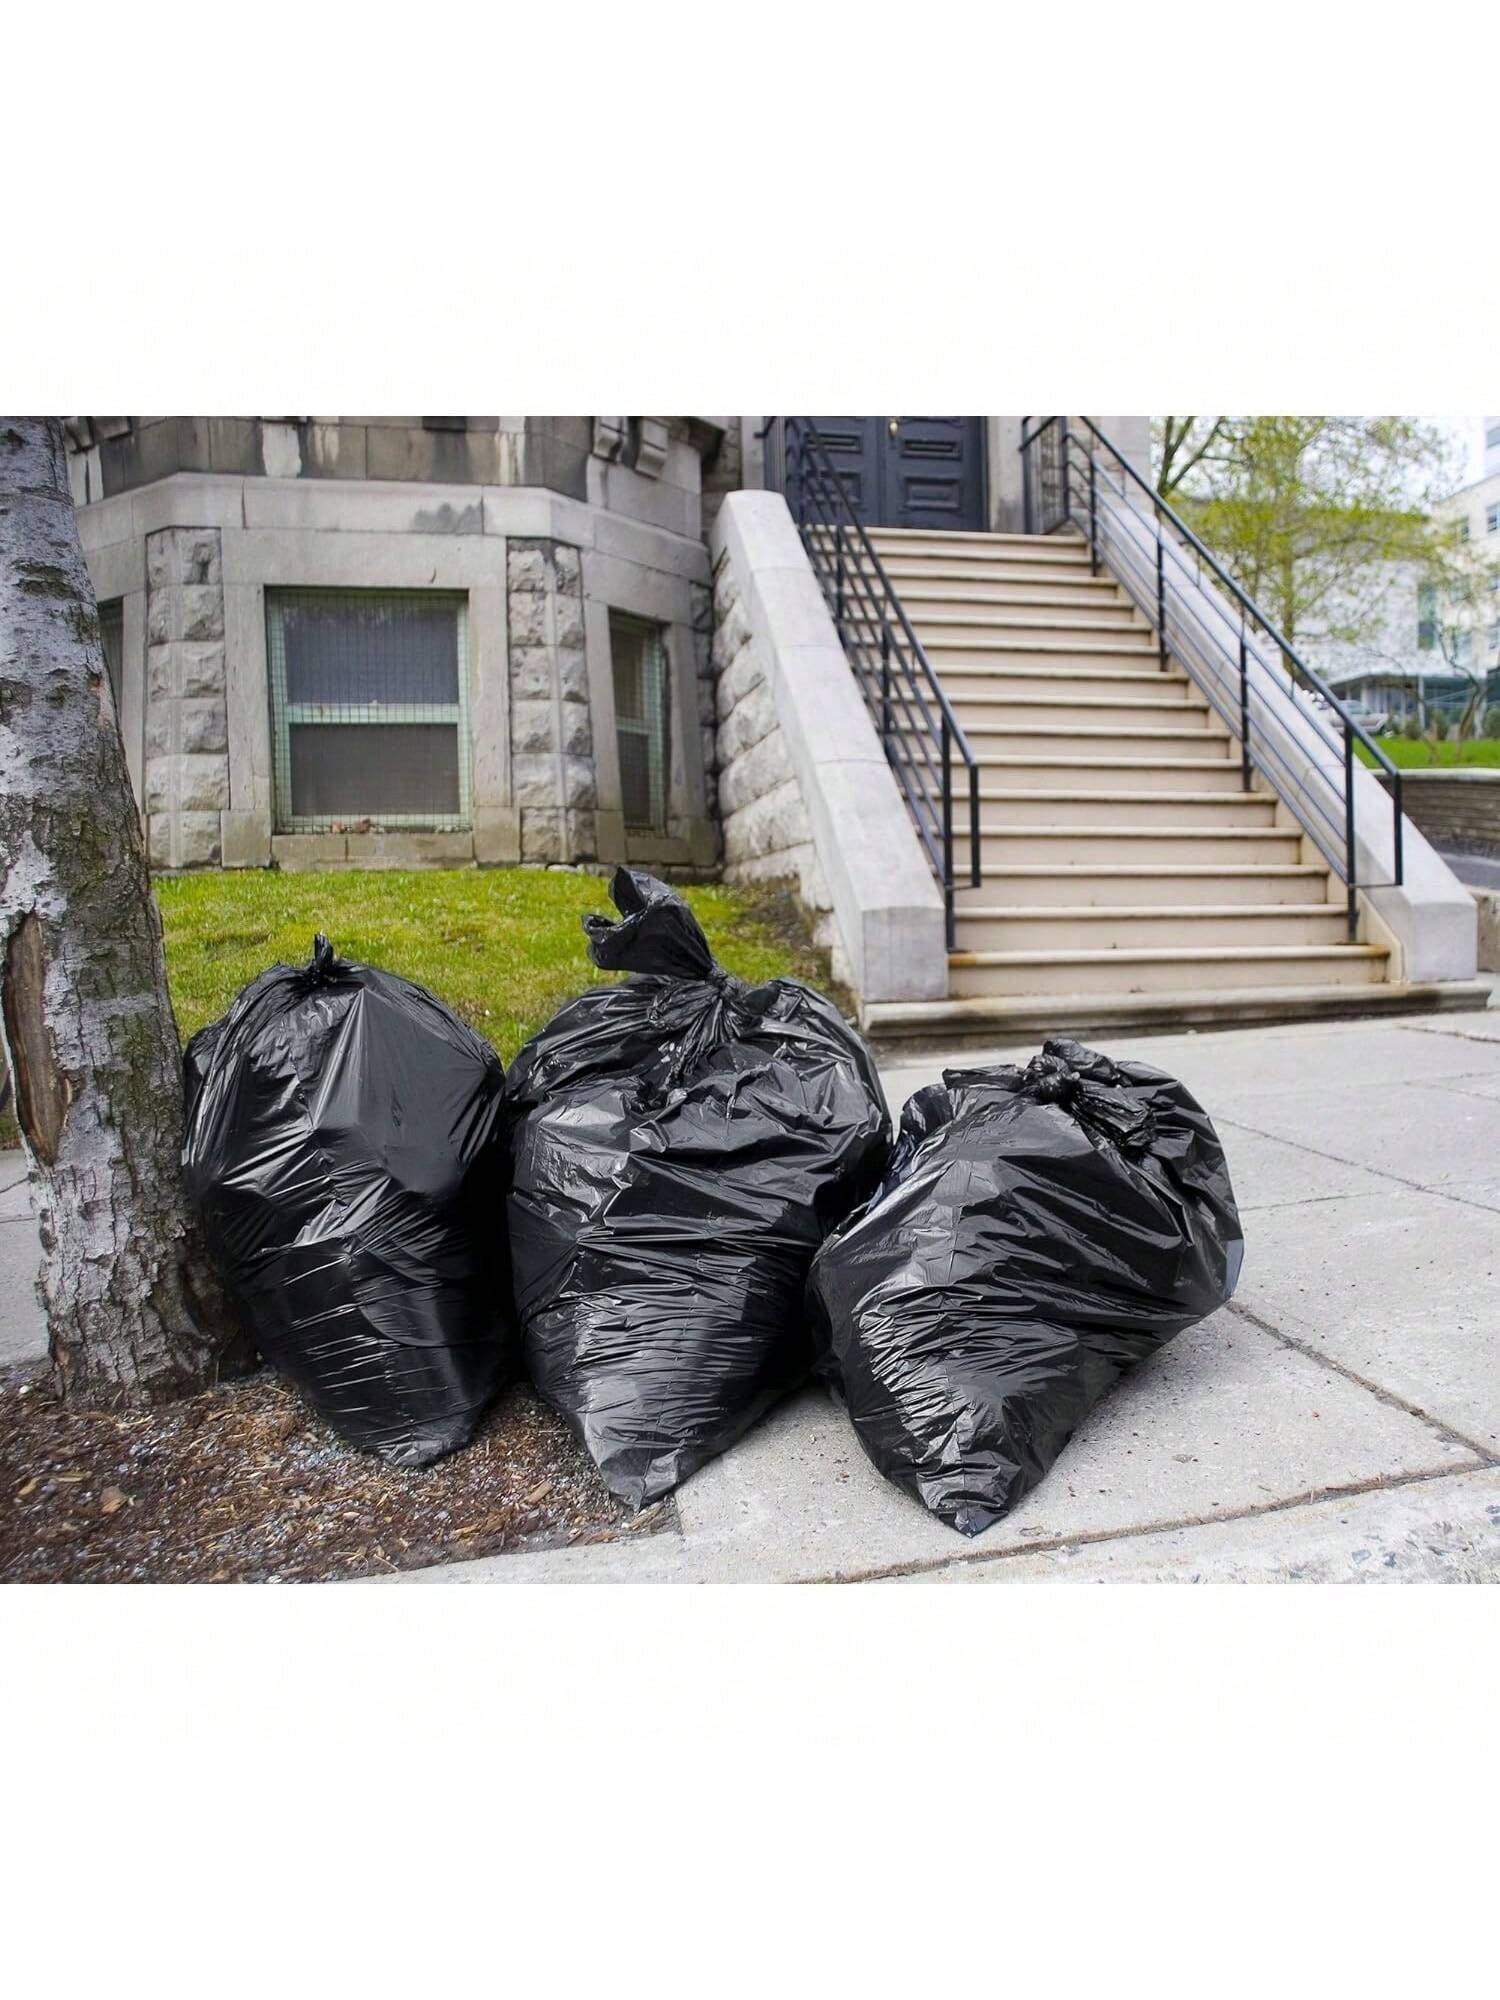 95 Gallon Trash Bags (Huge 50 Bags W/Ties) 95-96 Gallon Trash Bags Large